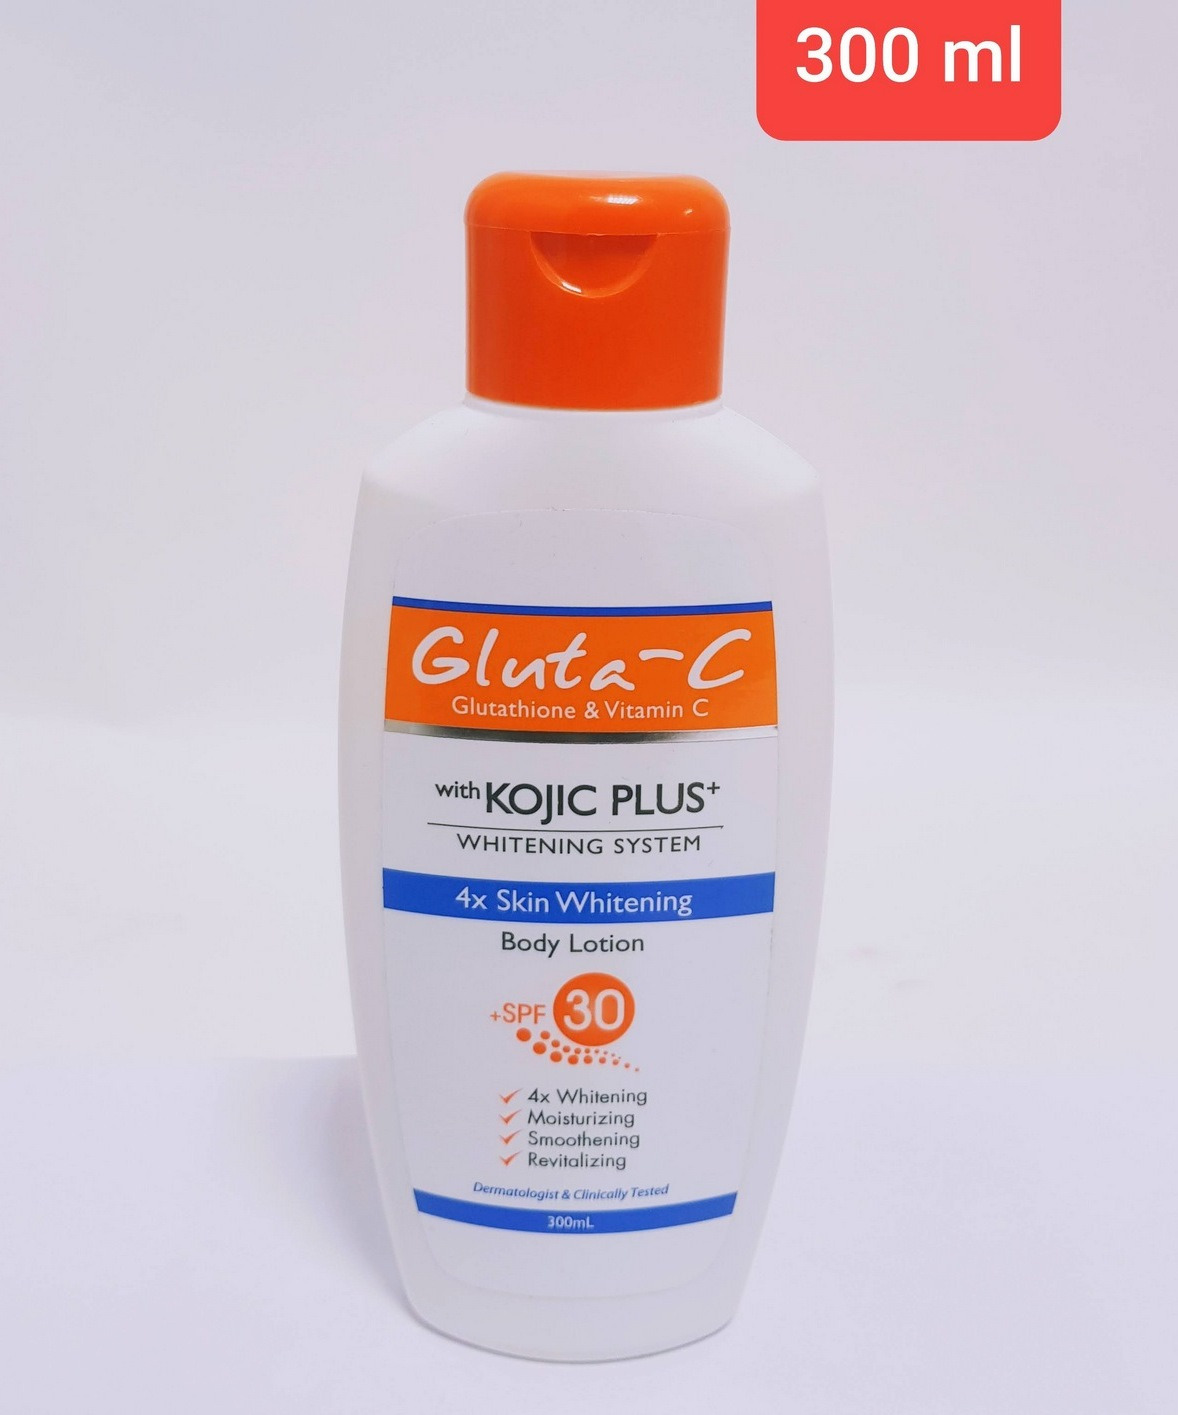 Gluta-C Kojic Plus+ Whitening Lotion with SPF 30 300ml (Cargo)